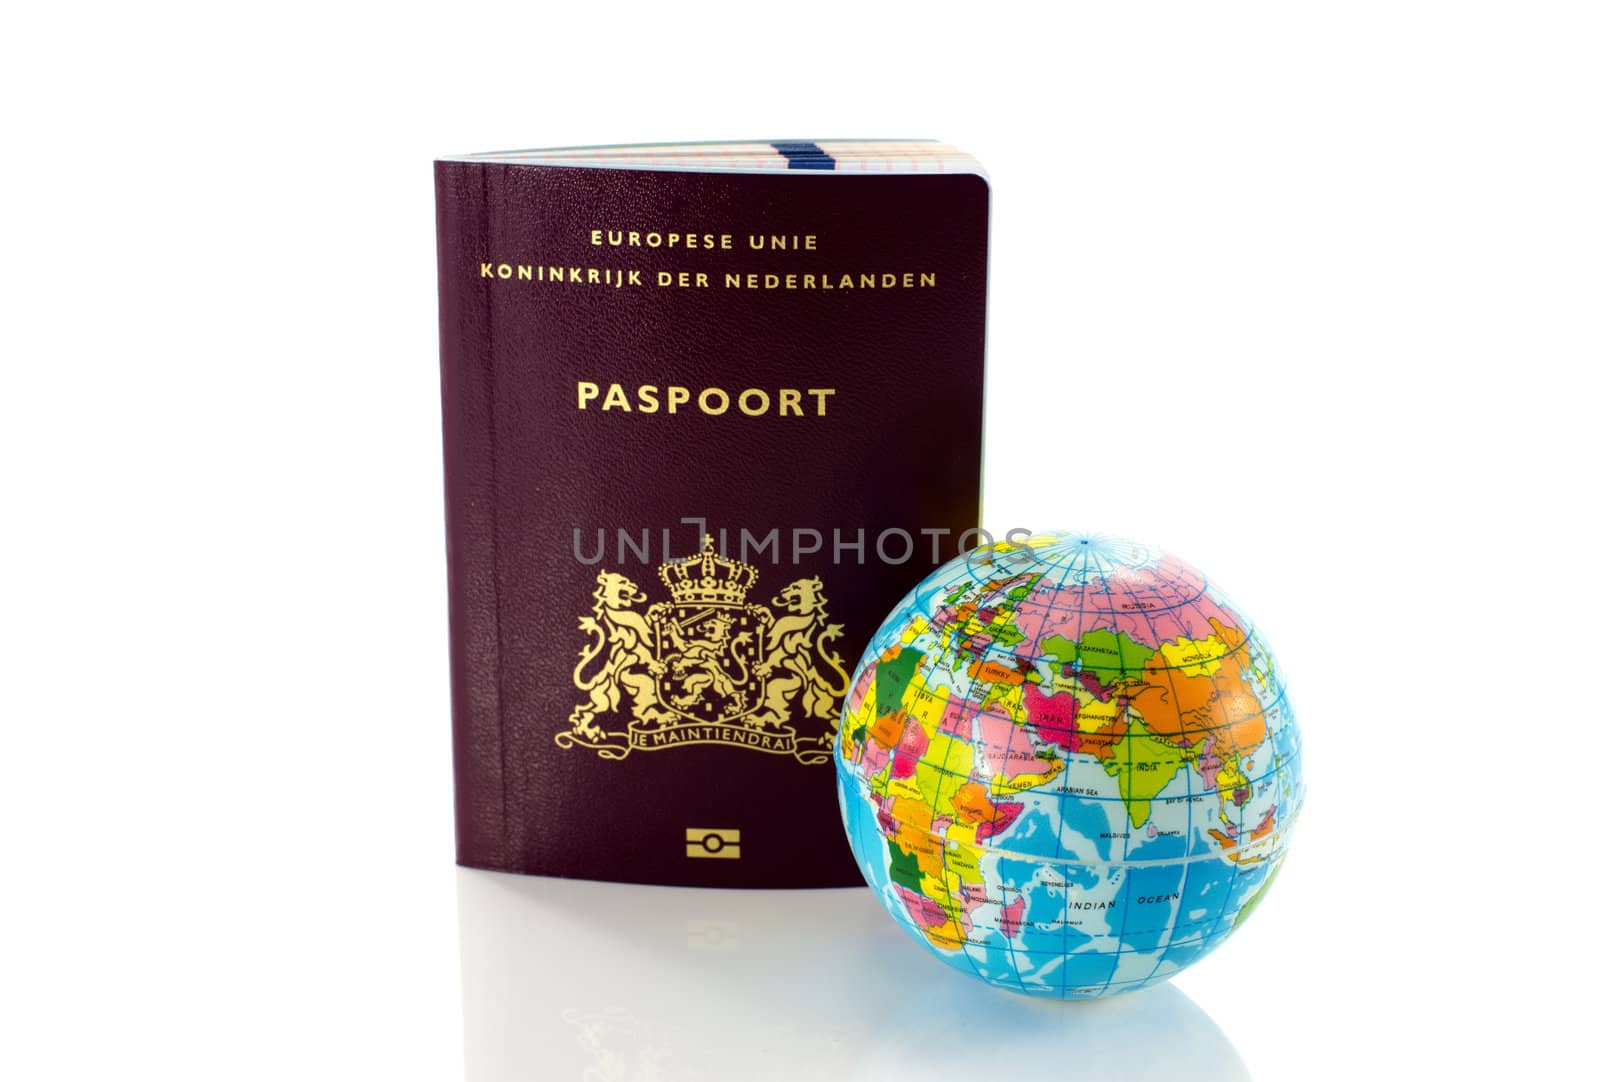 dutch passport travel document with world globe